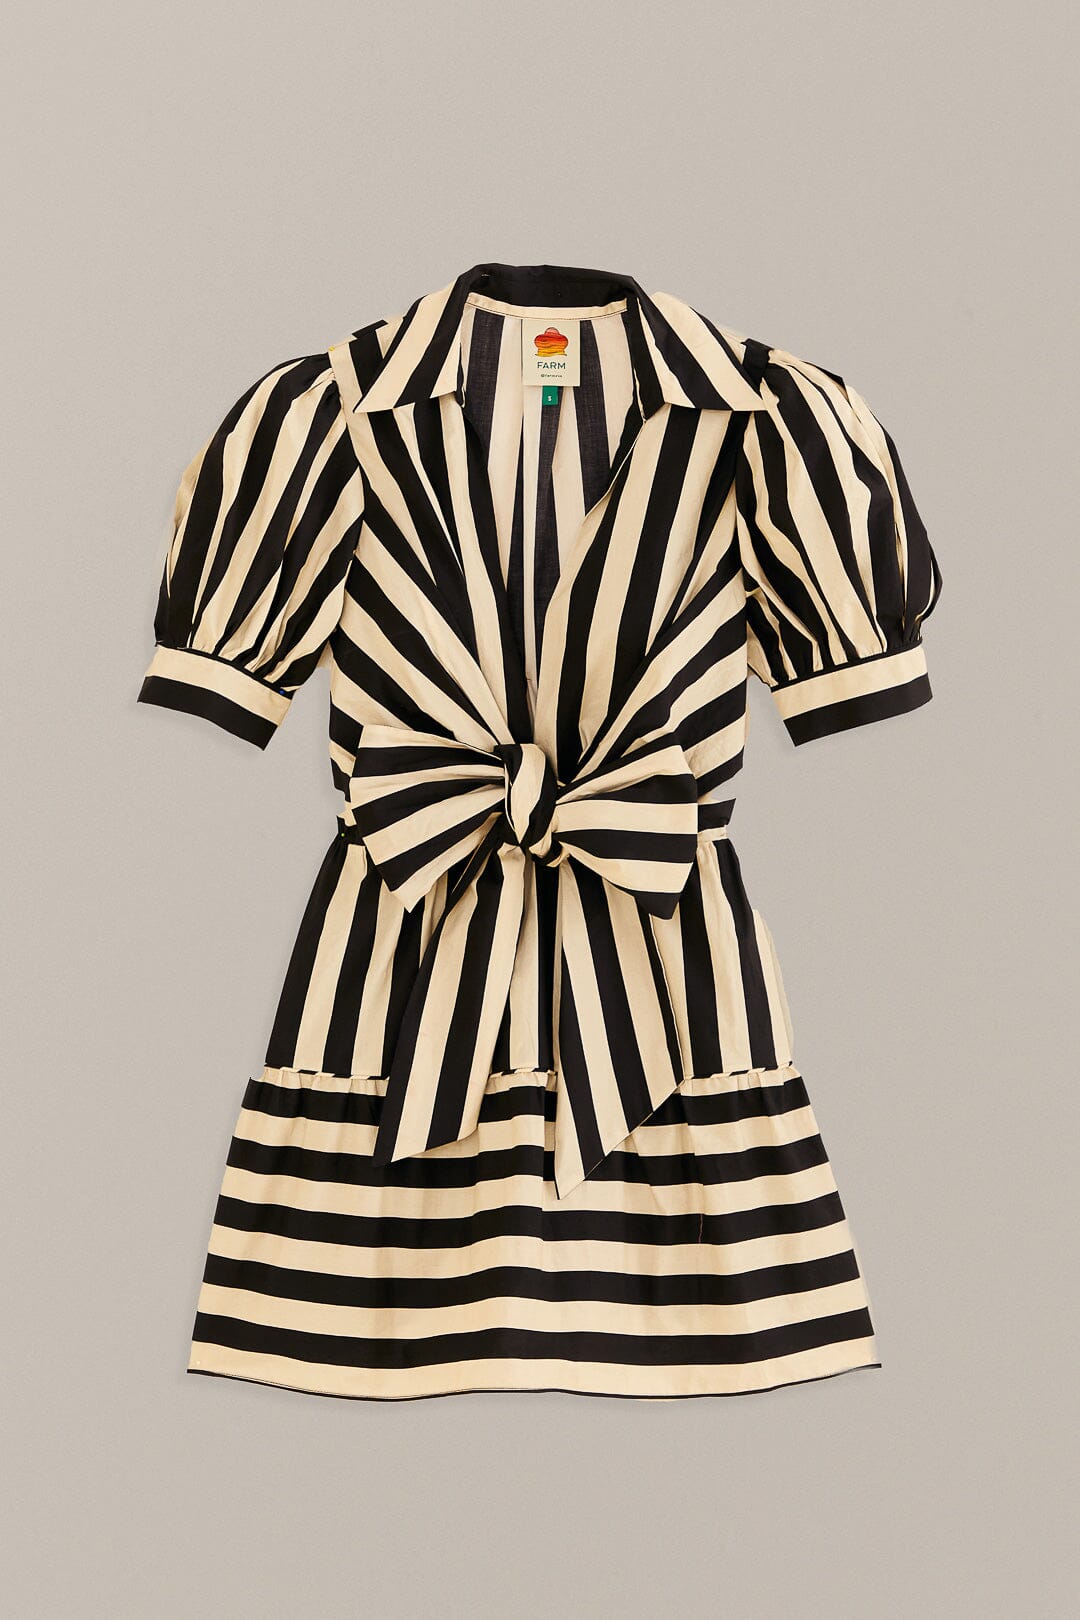 Mixed Stripes Short Sleeve Mini Dress in Black